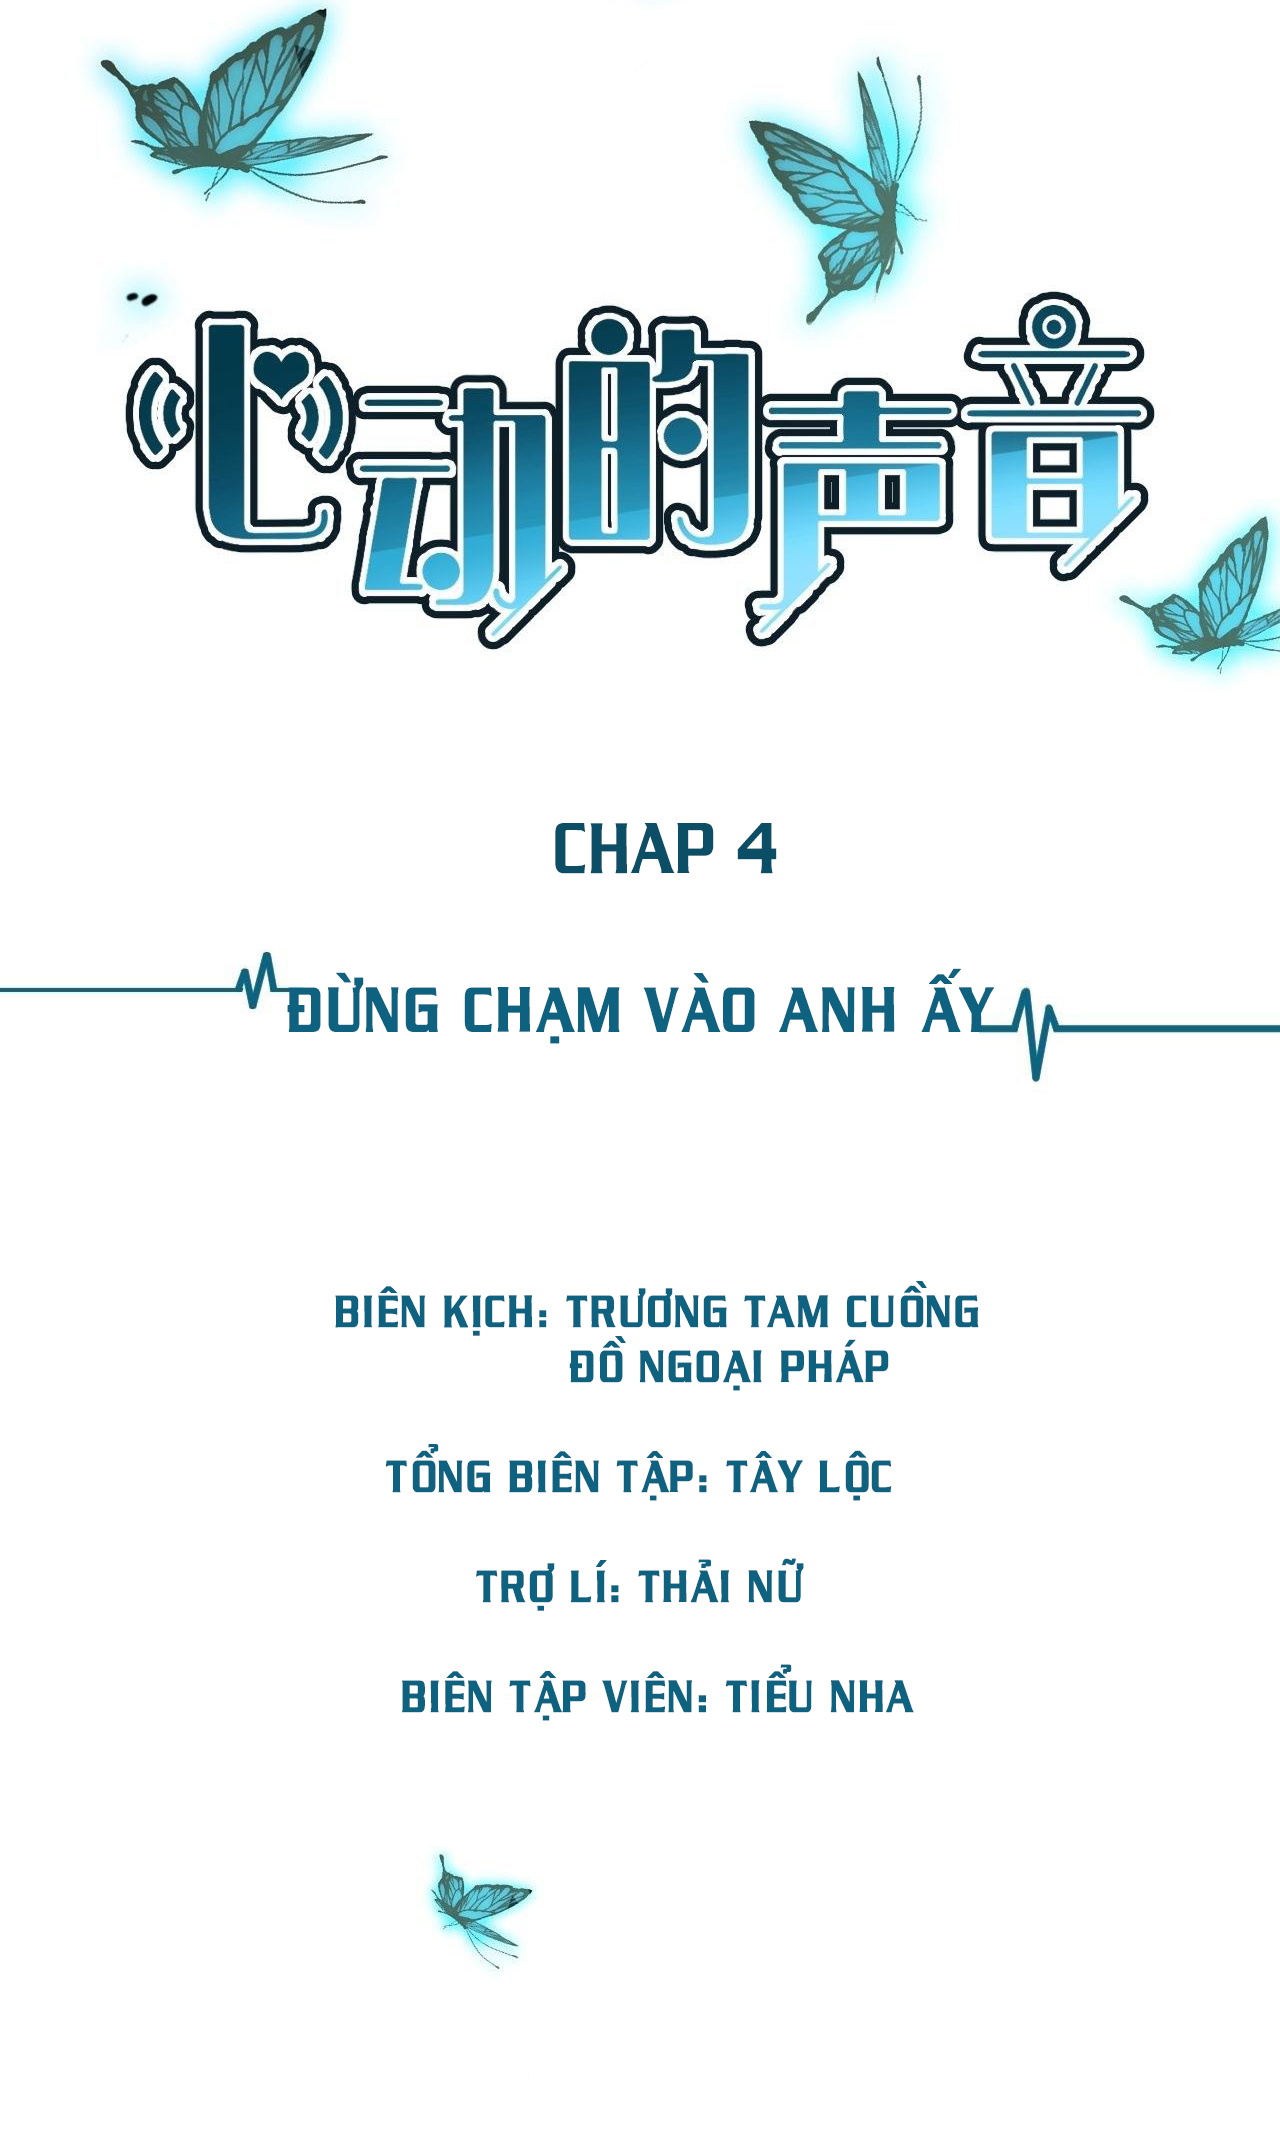 am-thanh-rung-dong-chap-4-1